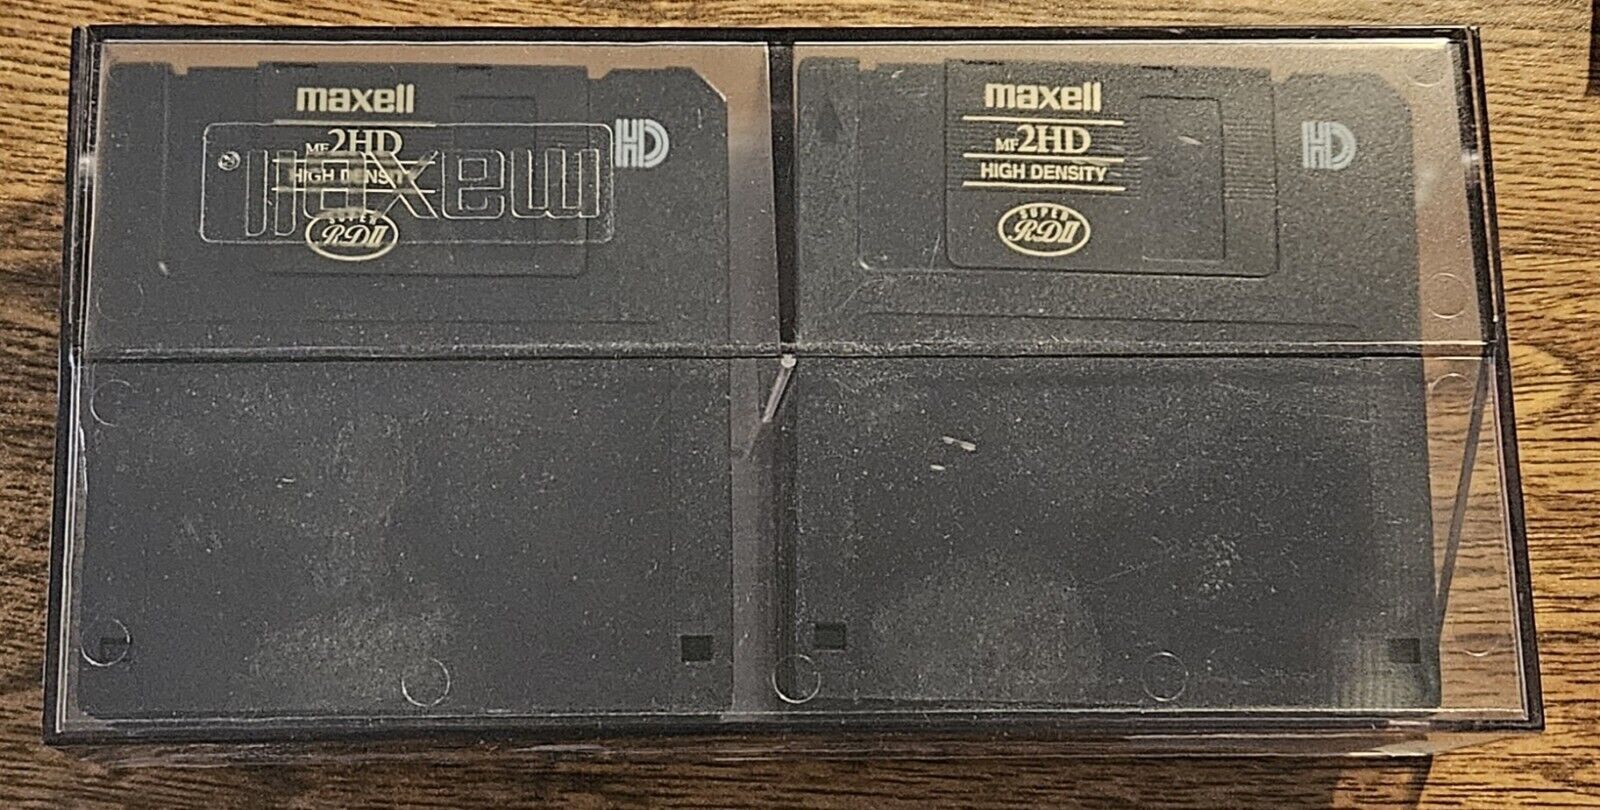 Maxell MF 2HD High Density Floppy Disks IBM 20 New Disks